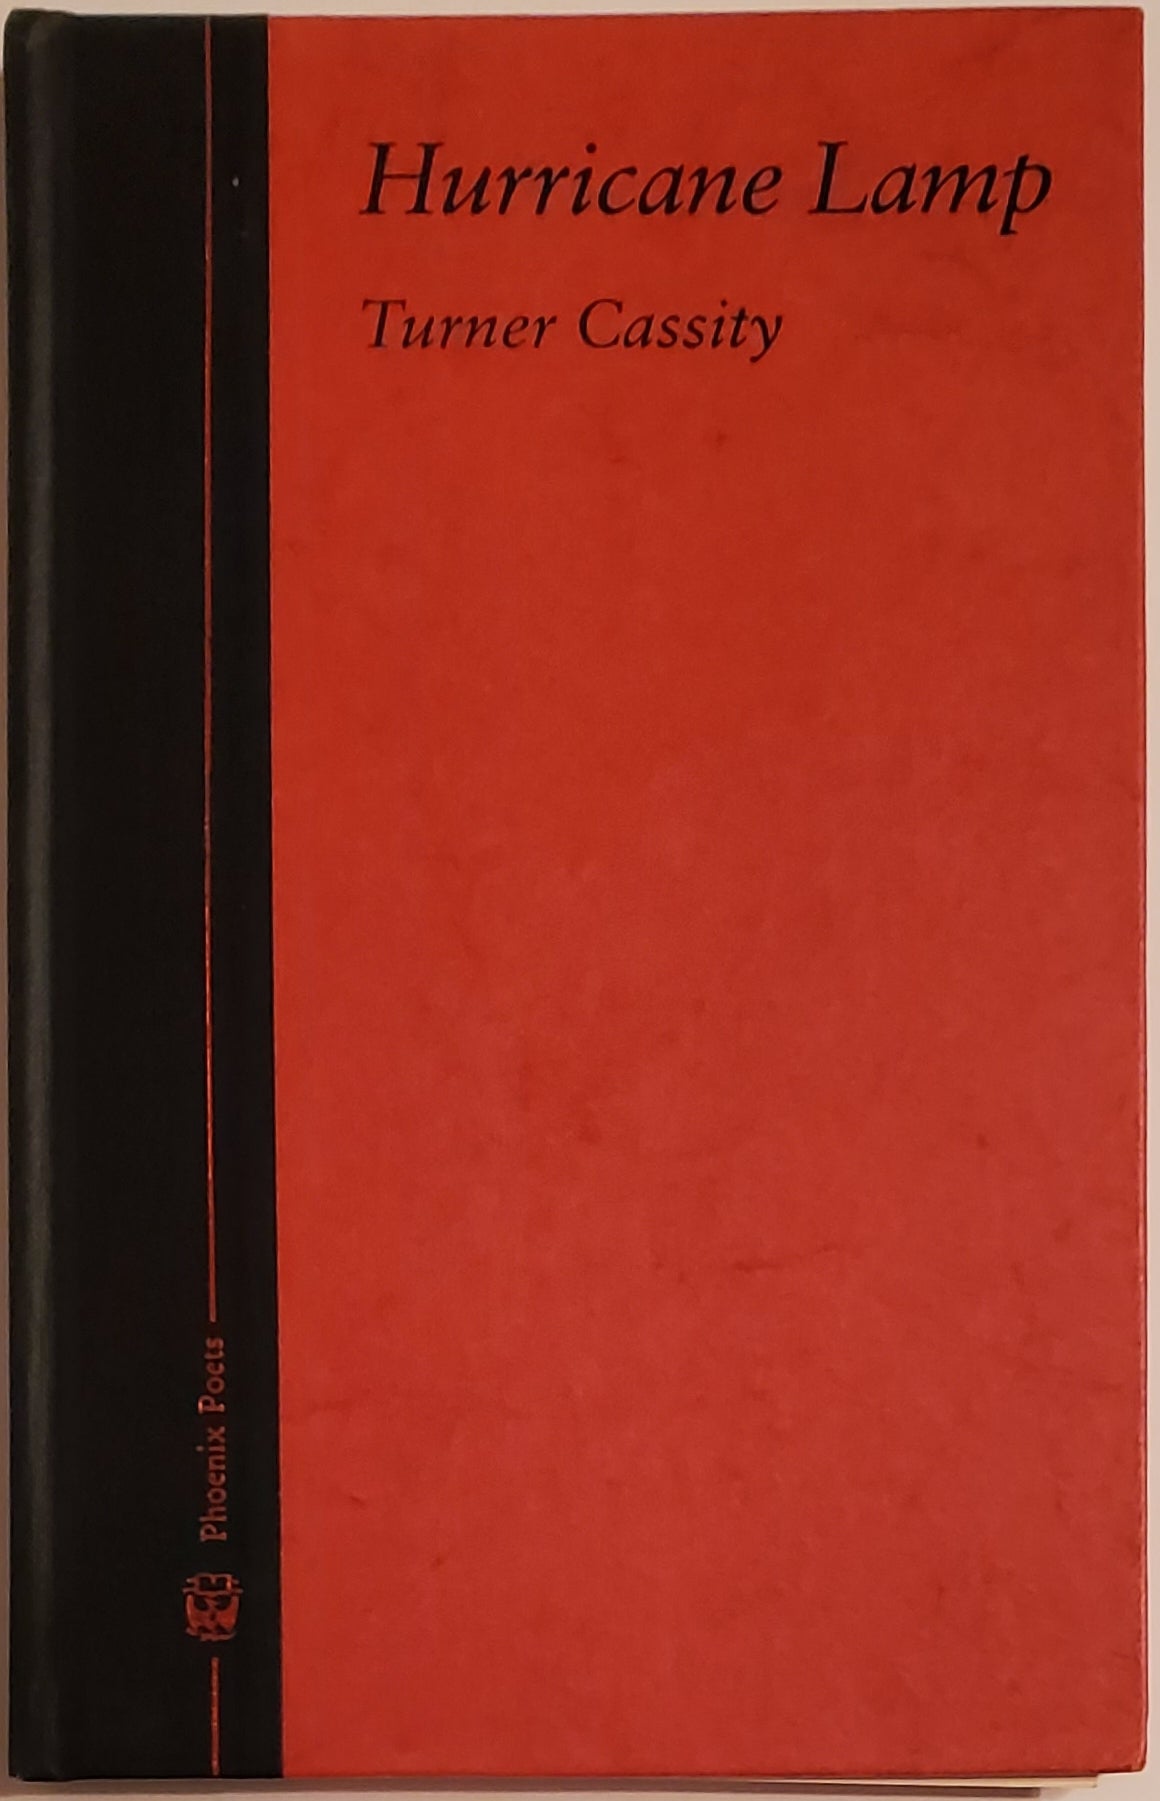 [Book #29305] HURRICANE LAMP. Turner Cassity.